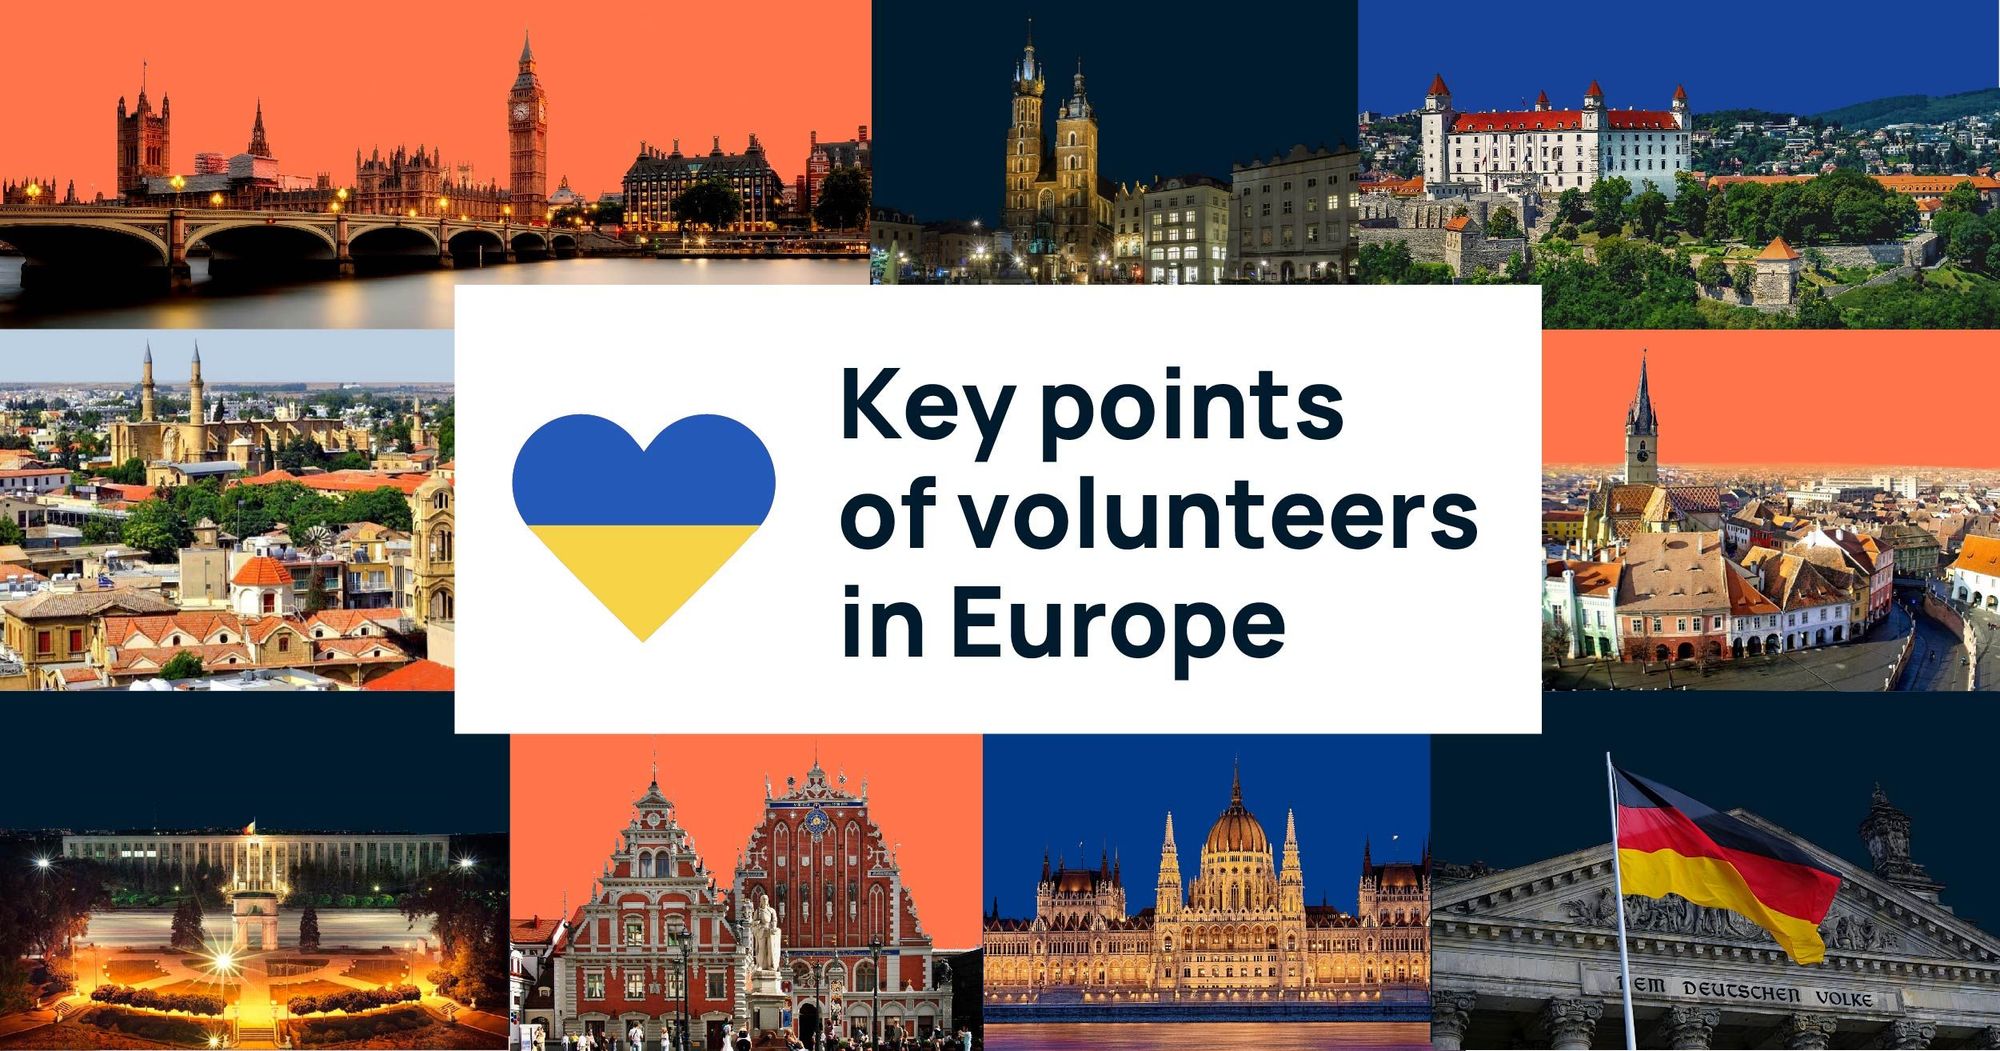 Ukraine Resources: Volunteer Initiatives for Ukrainian Refugees in Europe